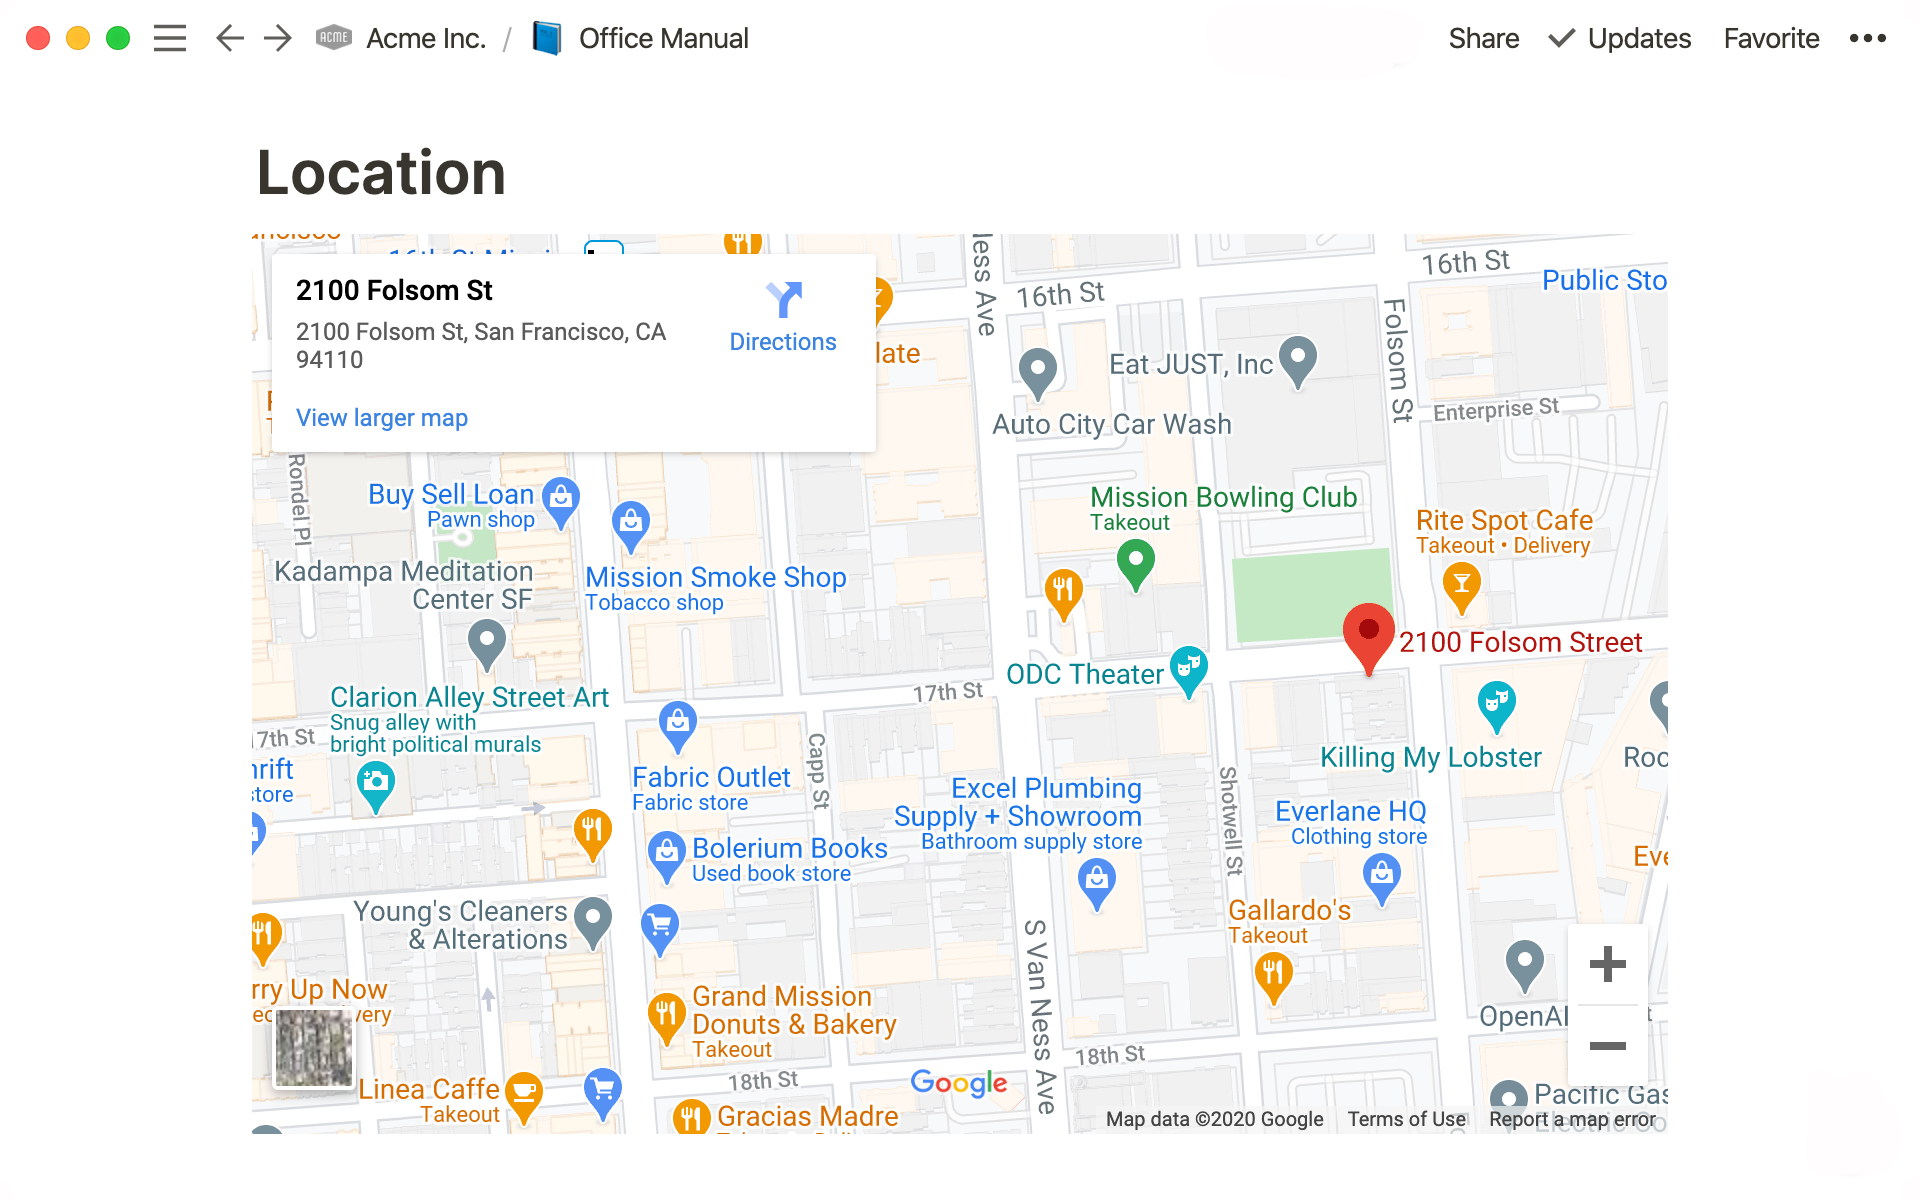 Embedding a map makes location sharing visual.